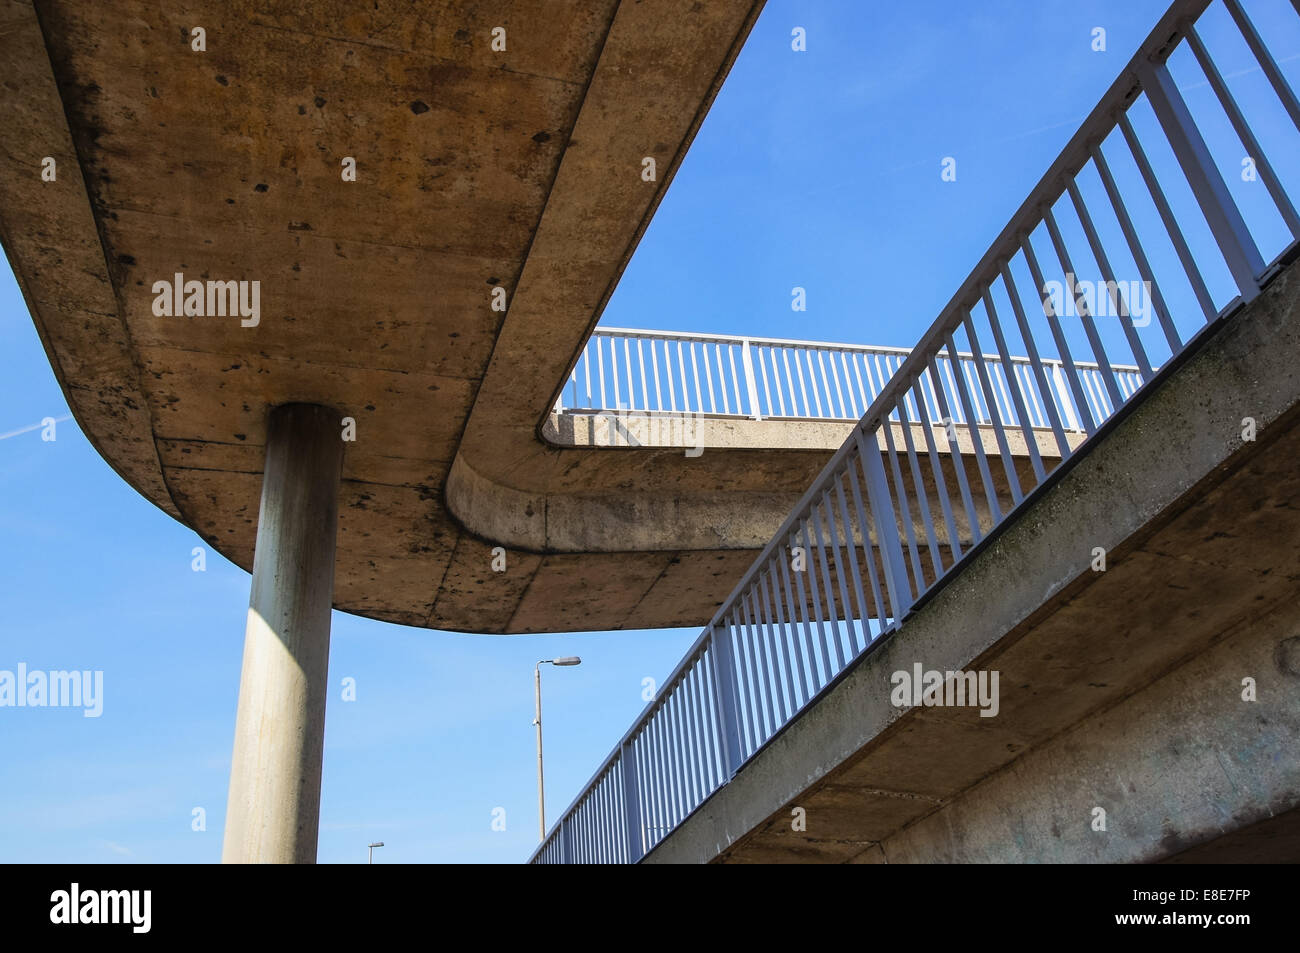 concrete footbridge, elevated overpass with blue sky Stock Photo